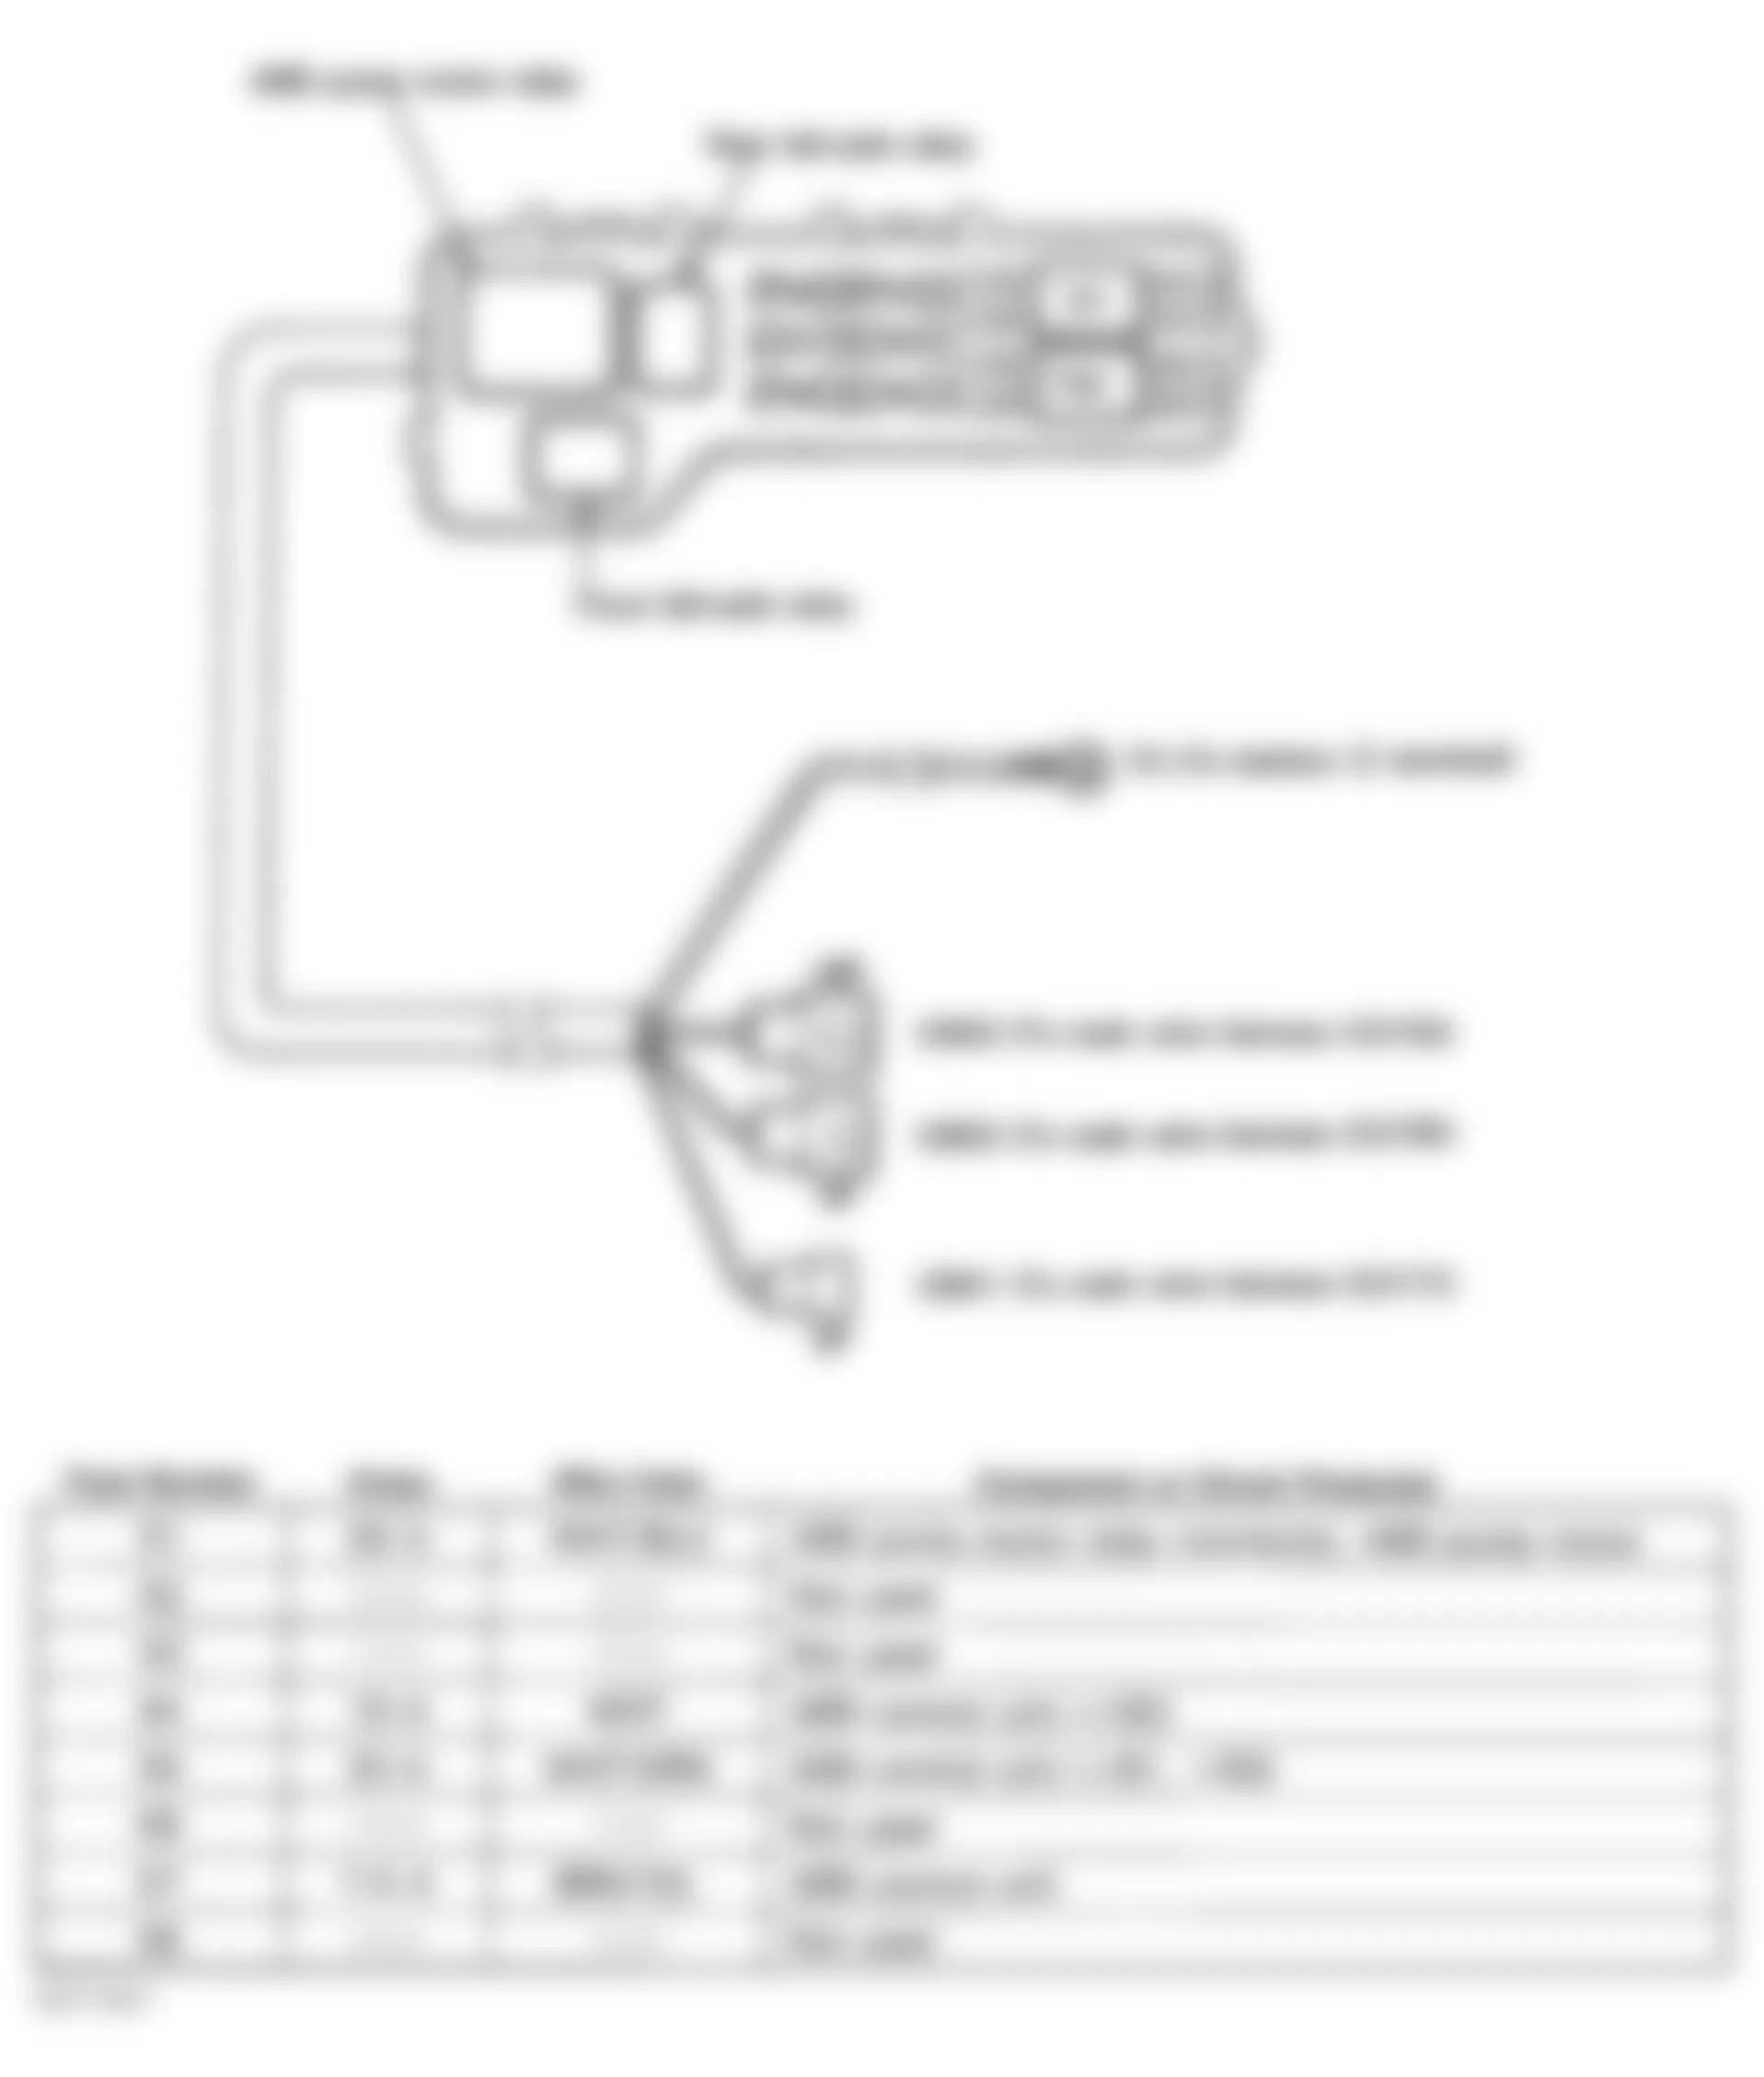 Honda Civic del Sol S 1996 - Component Locations -  Identifying Under-Hood Fuse/Relay Box Components & Legend